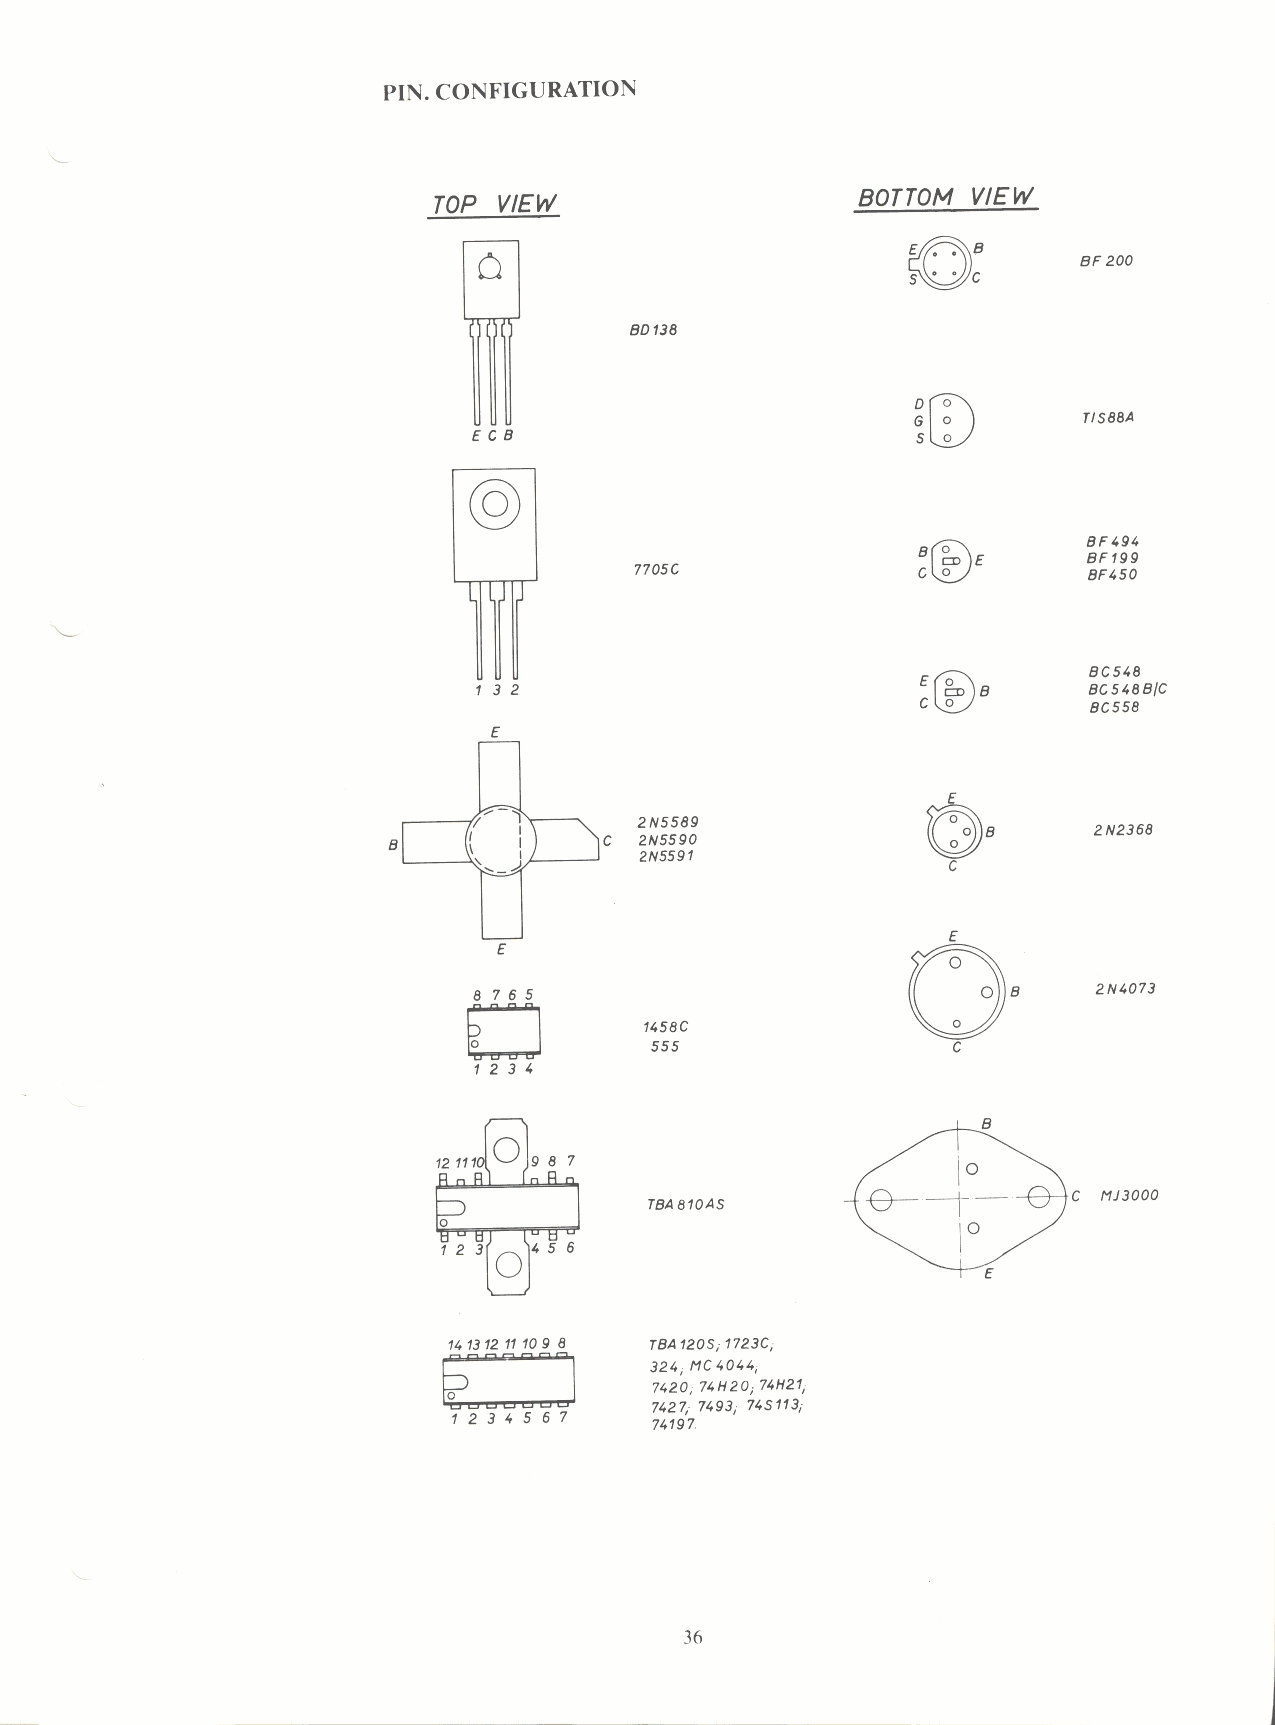 Pin configuration